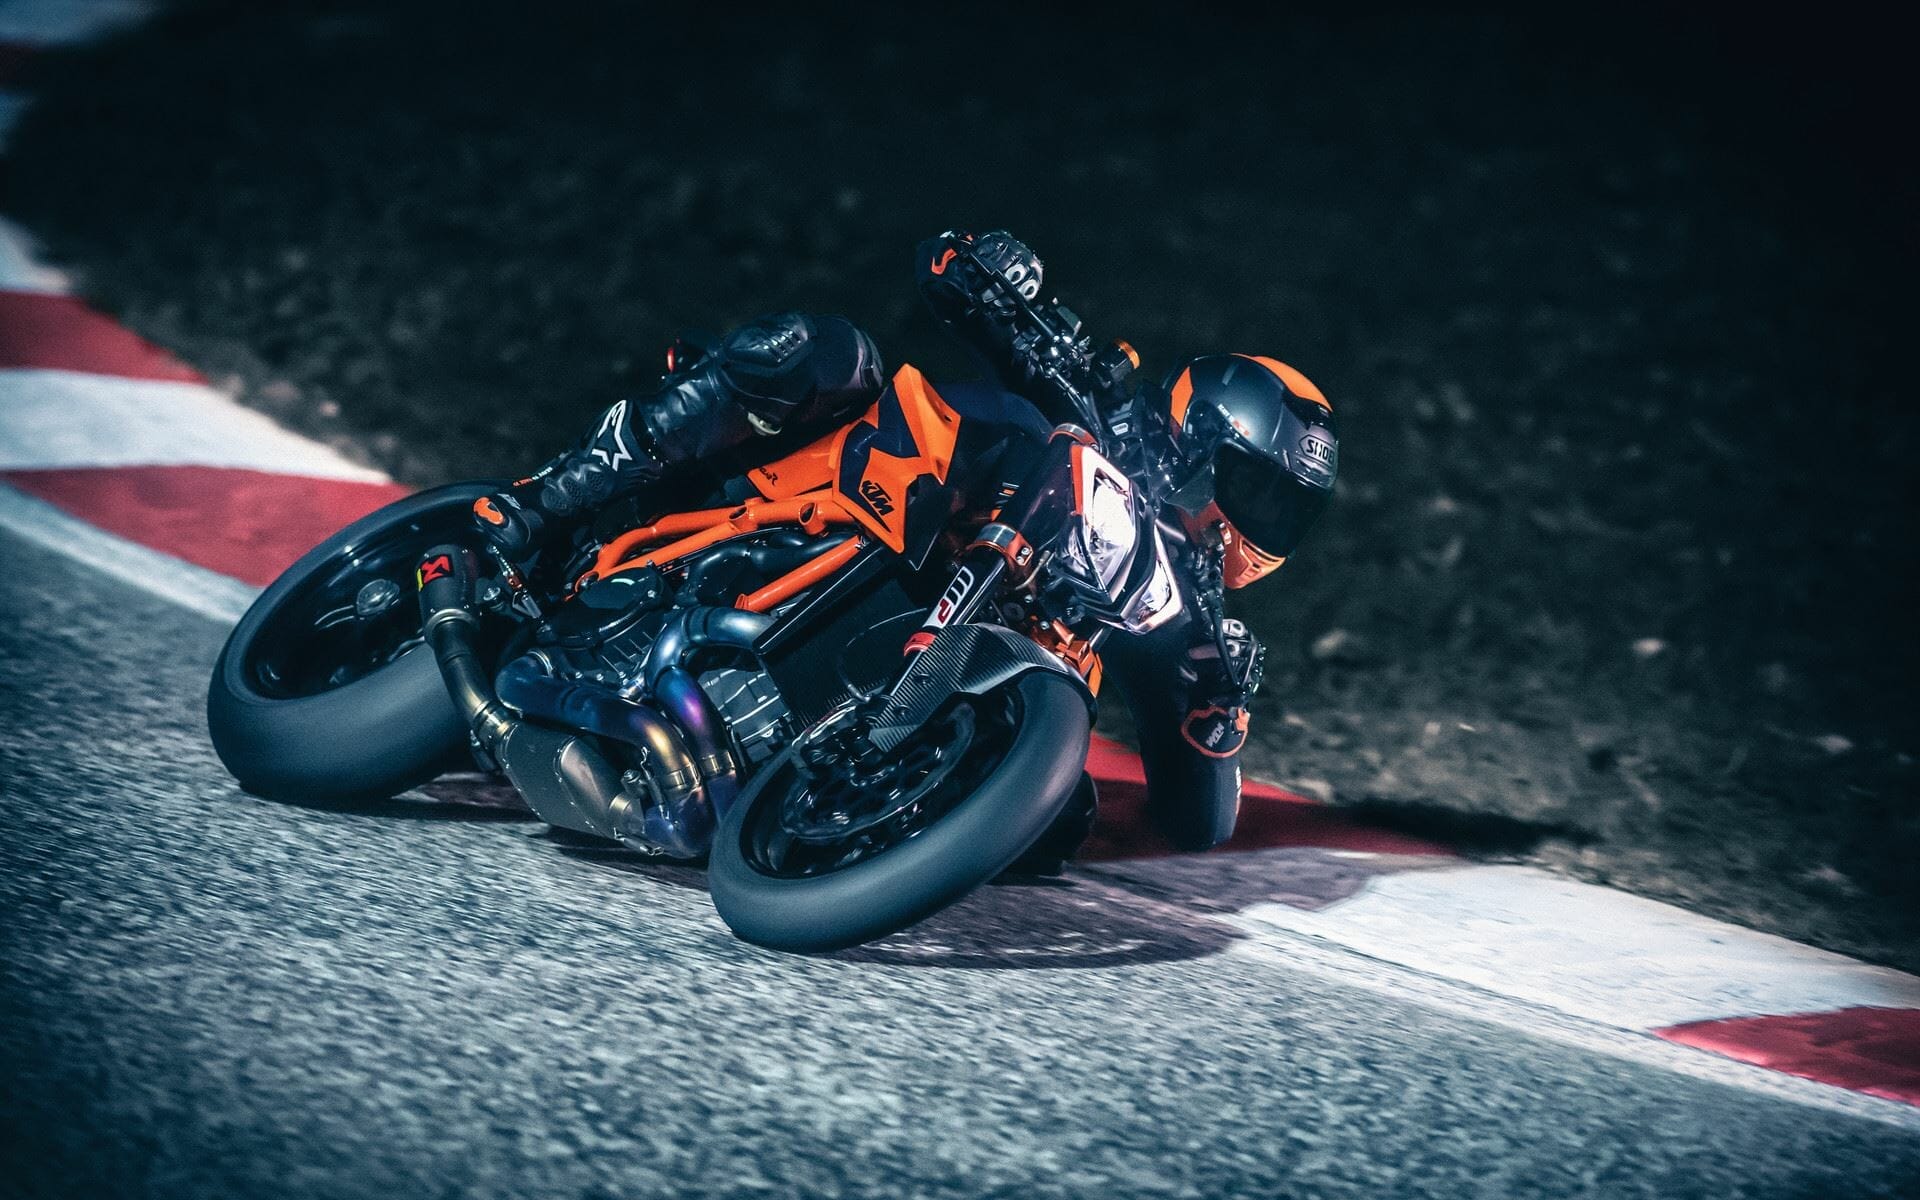 #KTM #1290SuperDukeR
- also in the app Motorcycle News